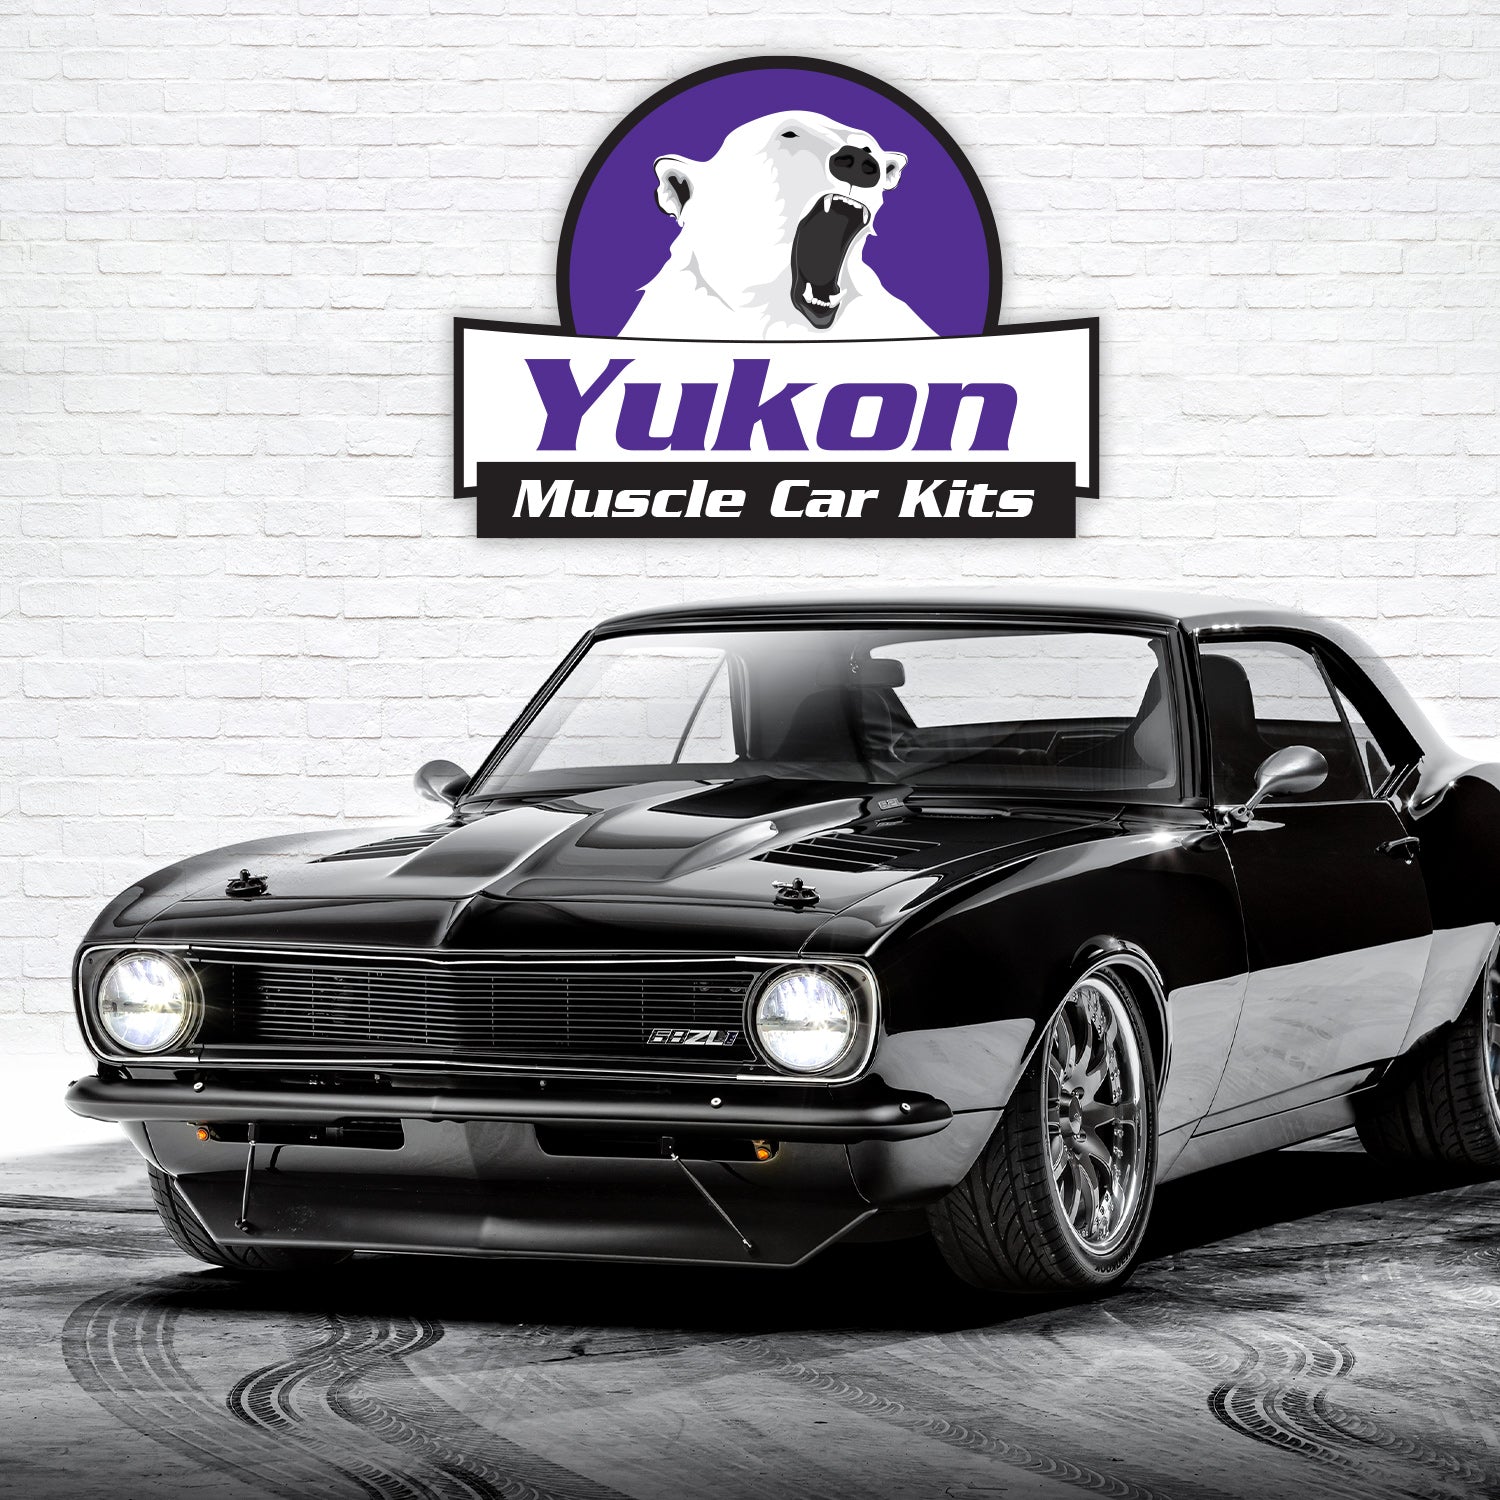 Yukon Gear Ford Lincoln Mercury (4WD/RWD) Differential Ring and Pinion Kit - Rear YGK2310